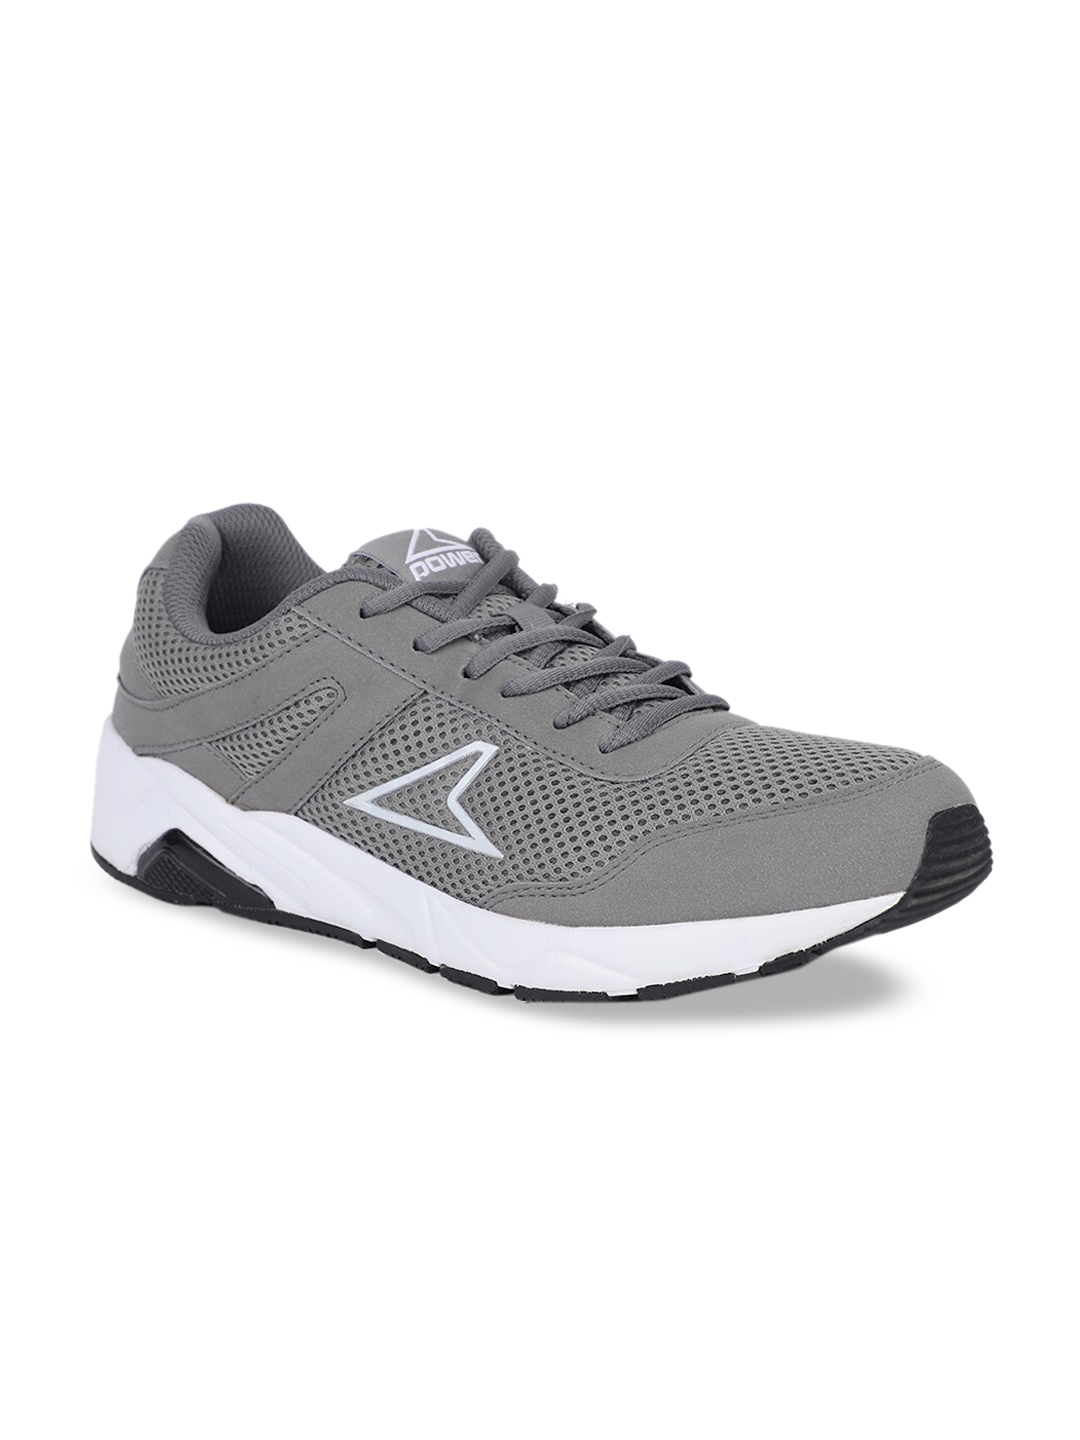 Buy Power Men Grey Running Shoes - Sports Shoes for Men 12453932 | Myntra